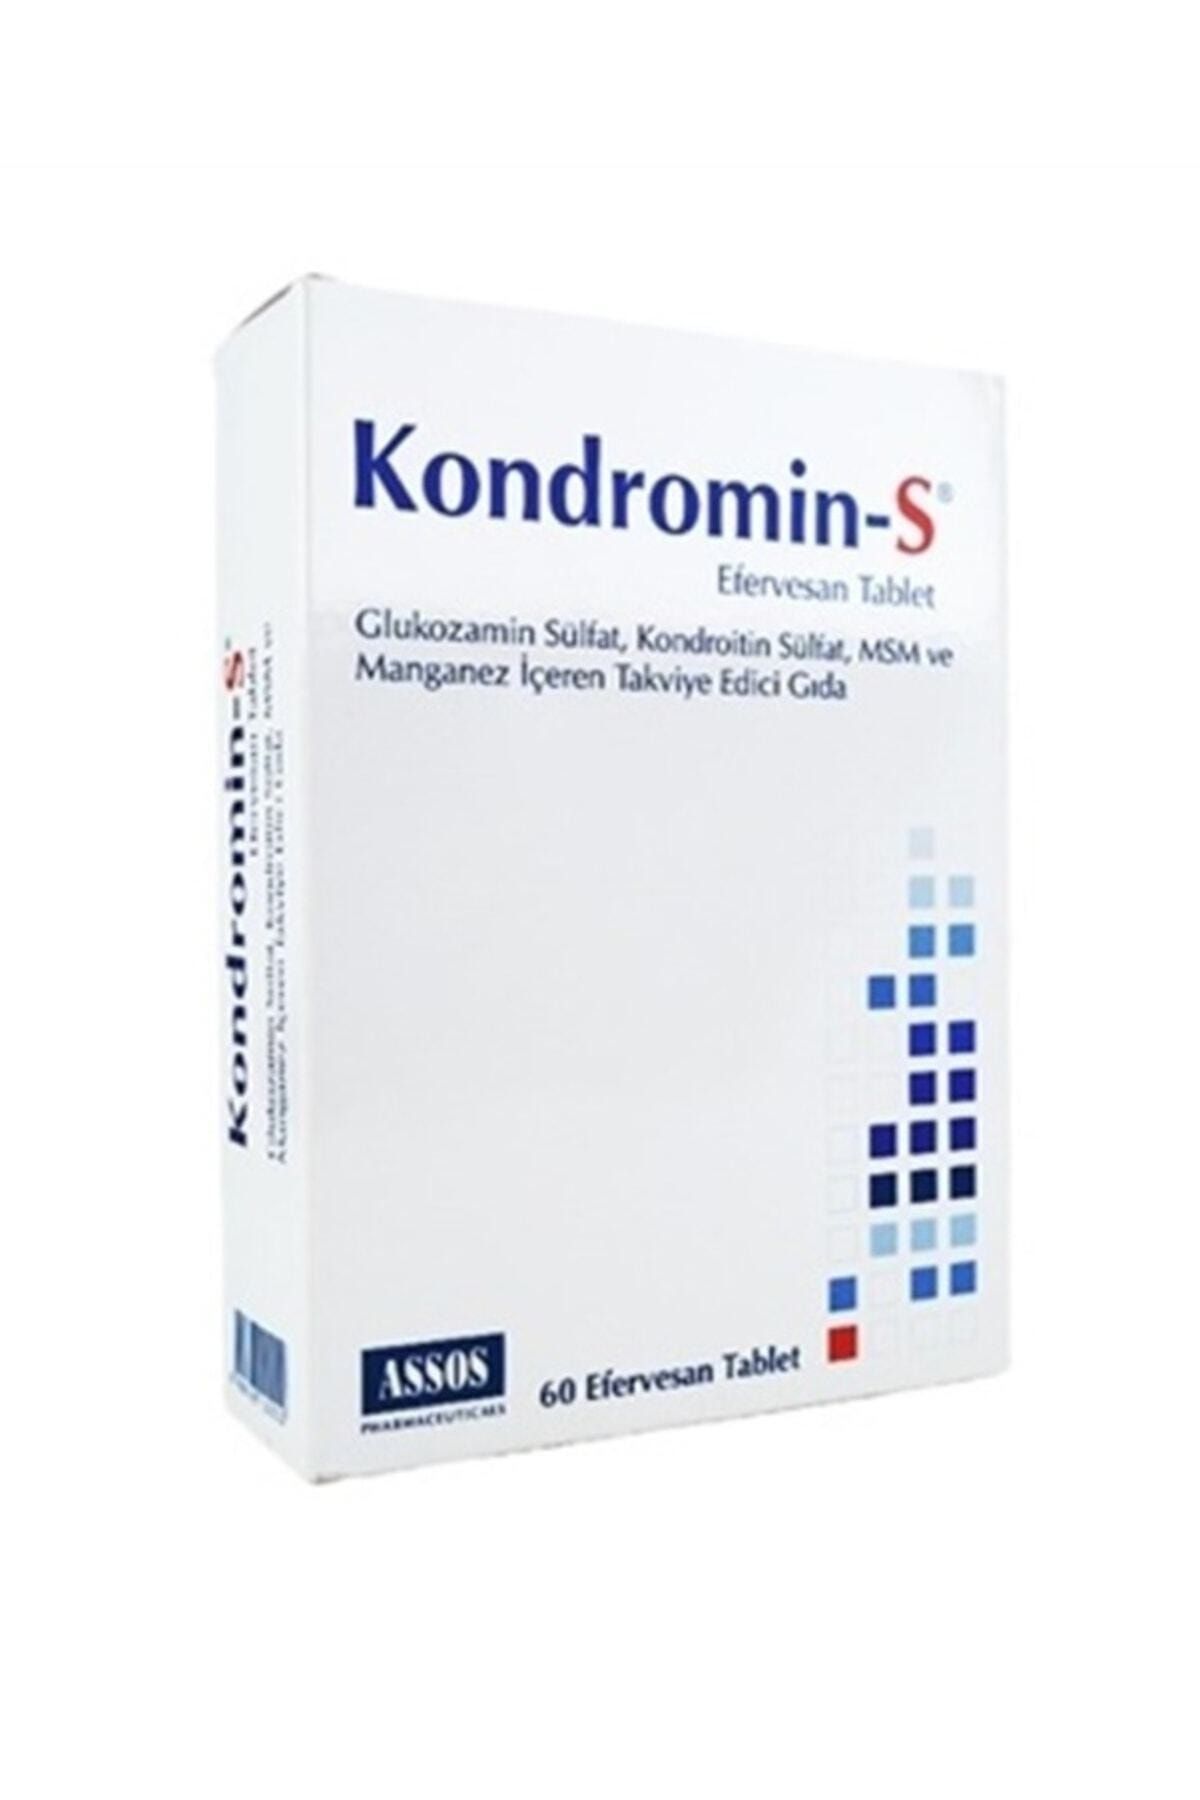 Assos Kondromin-s Suda Eriyen 60 Tablet